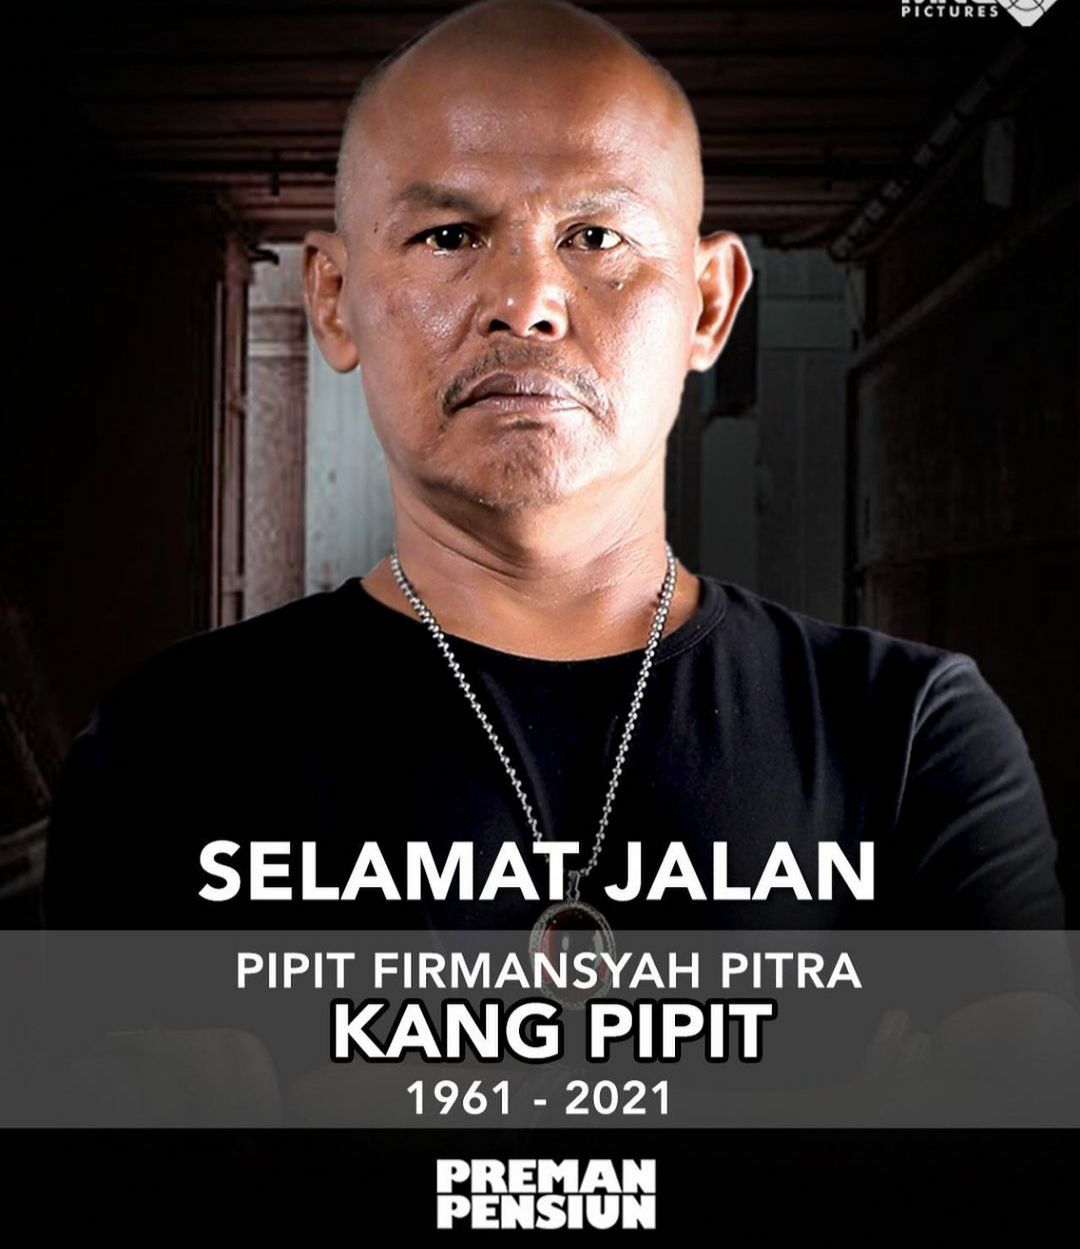 Ica Naga alias Kang Pipit alias Firmansyah Fitra pemain Preman Pensiun meninggal dunia di RS. Muhammdyah Bandung sekitar setelah Ashar hari Jumat 29 Januari 2021.